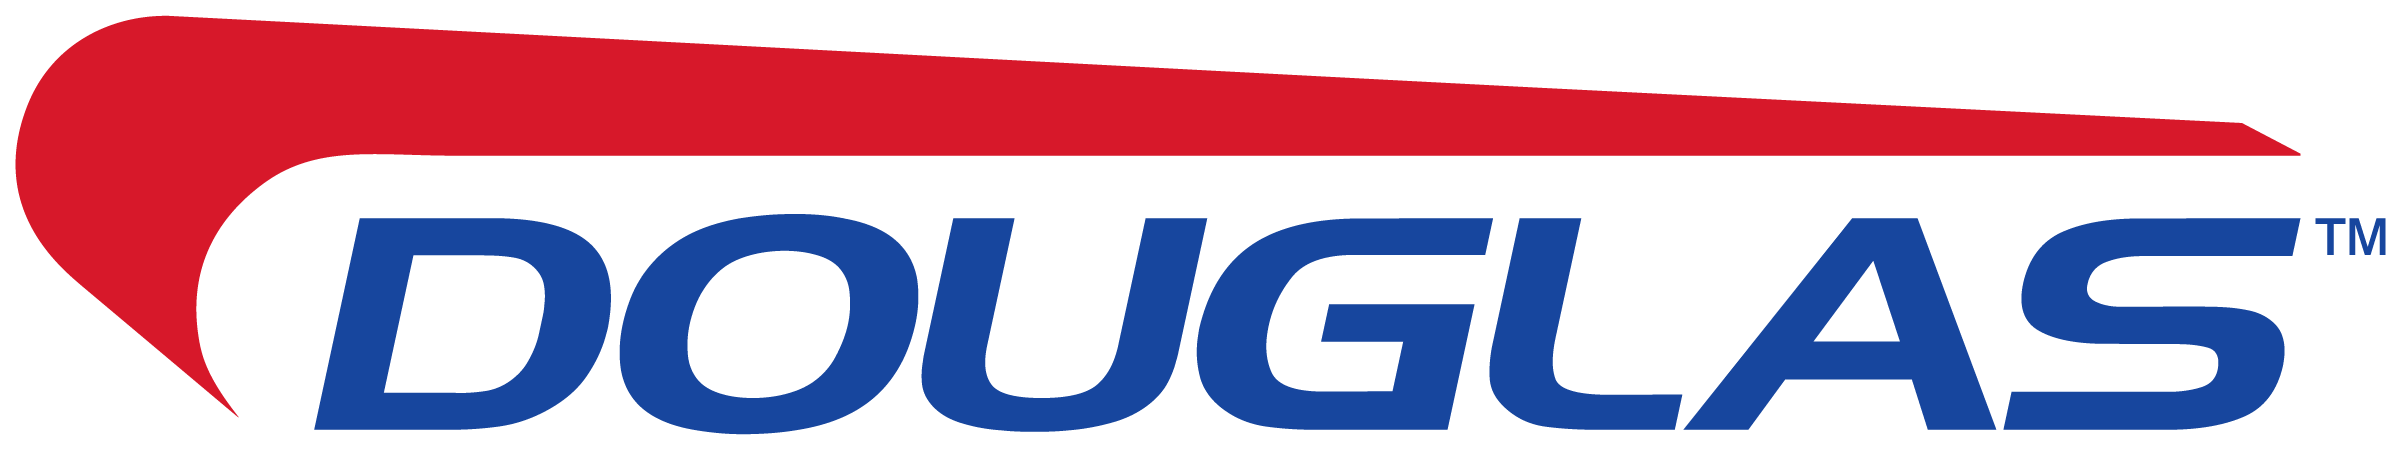 Douglas Manufacturing